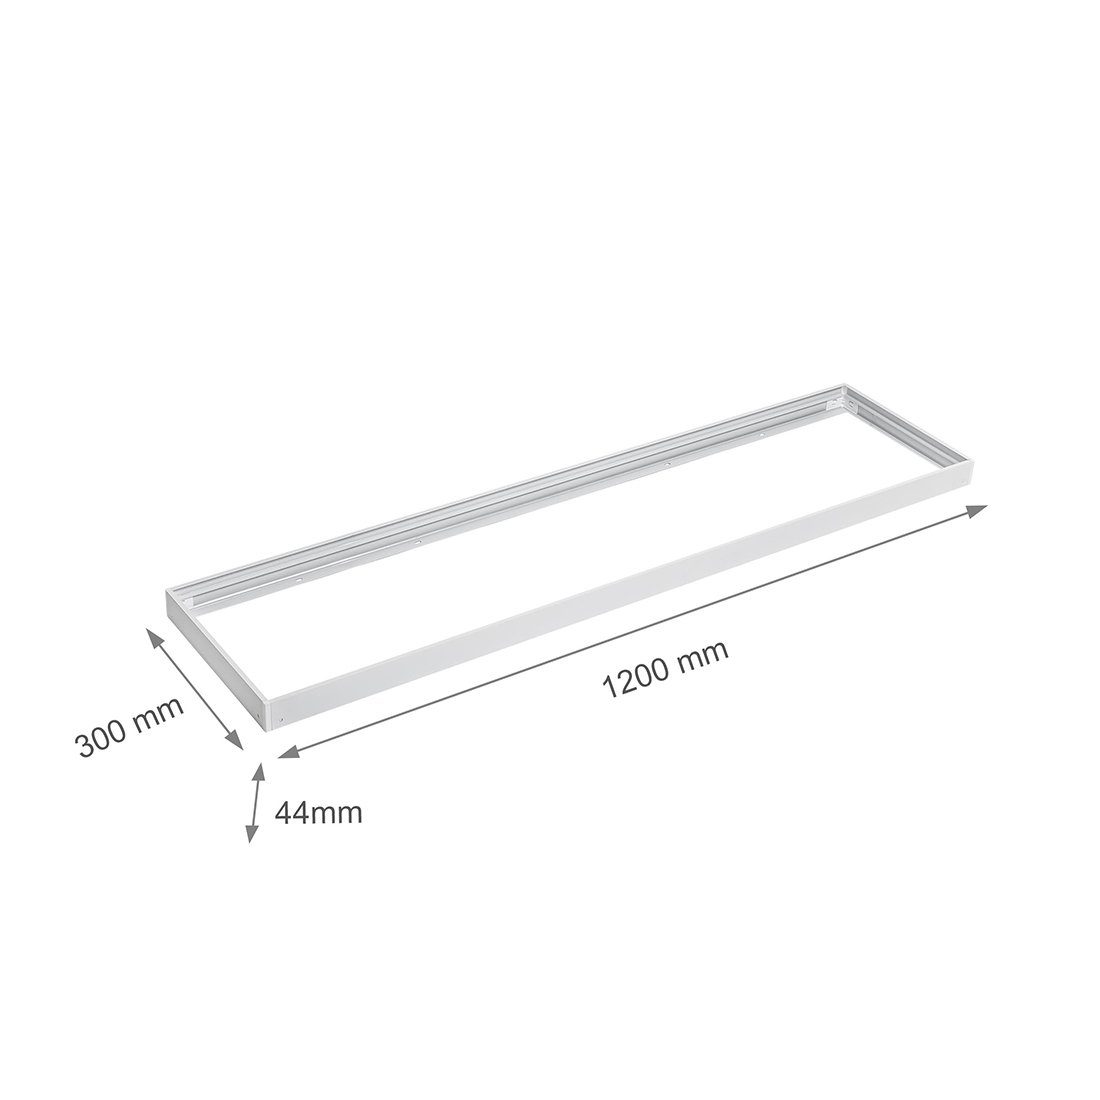 Panel Aluminium 40w LED Aufbau Einbau Panel, Panele 120x30x4,4cm für aus LED Lecom LED oder 120x30 Aufbaurahmen Panel